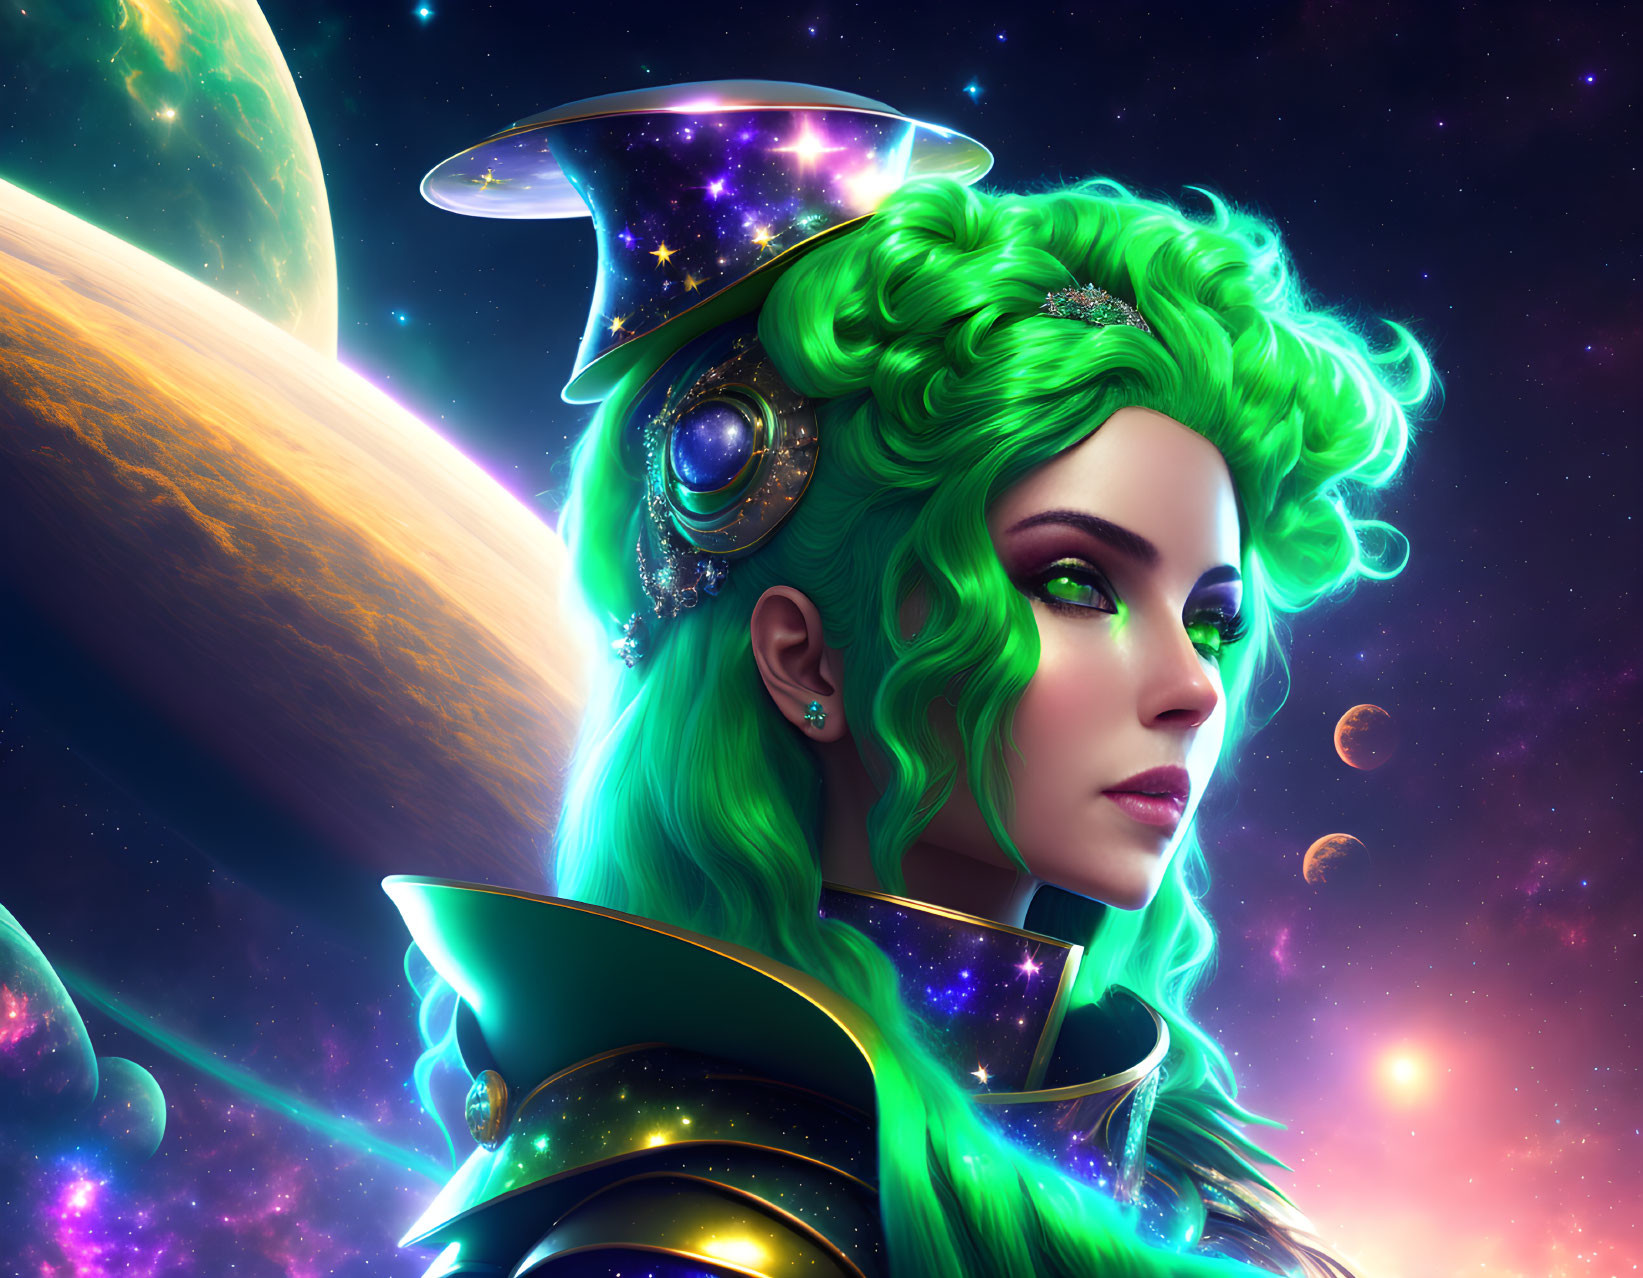 Digital artwork: Woman with vibrant green hair in cosmic attire, galaxy backdrop.